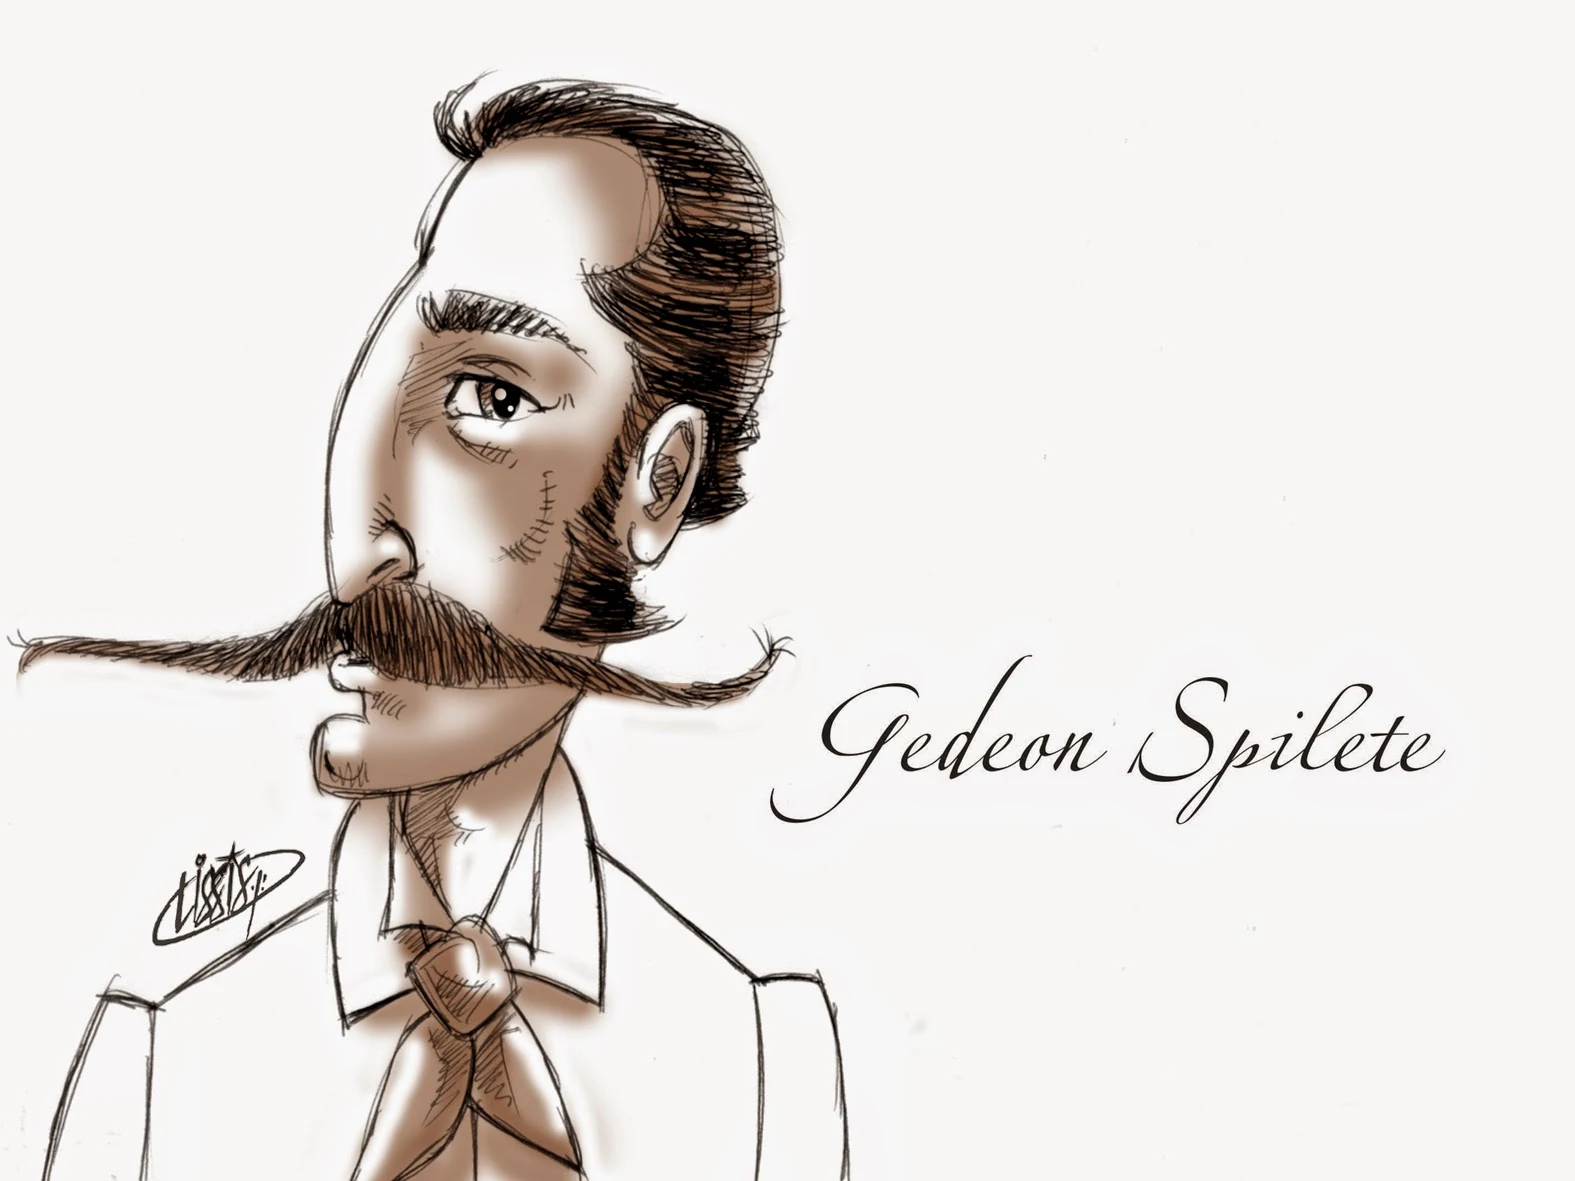 Gedeon Spilete